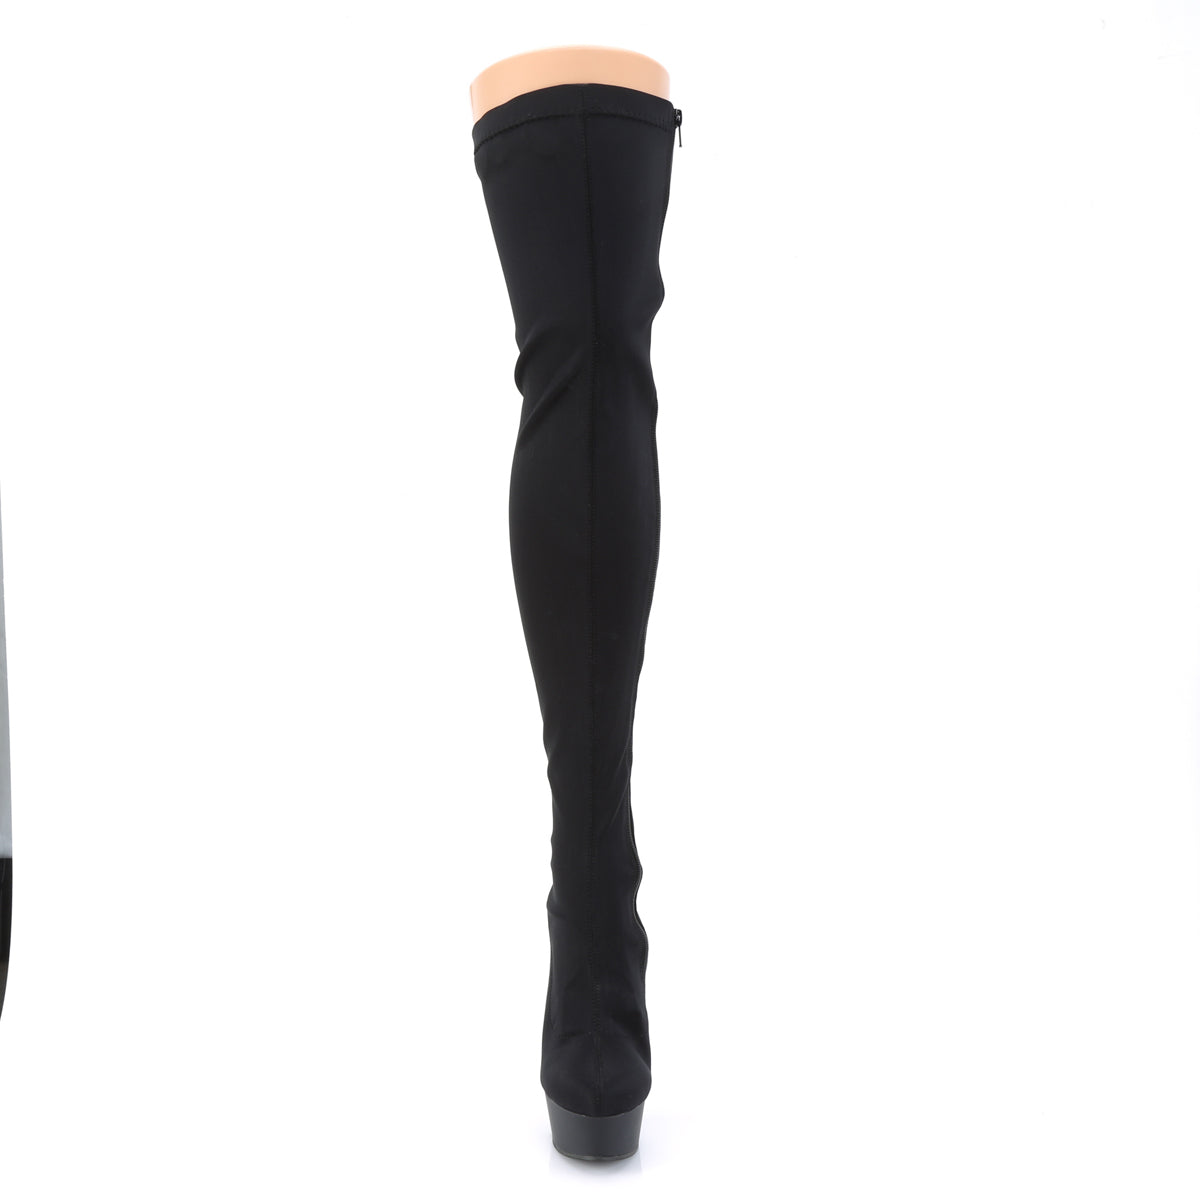 DELIGHT-3003 6" Heel Black Lycra Pole Dancing Platforms-Pleaser- Sexy Shoes Alternative Footwear